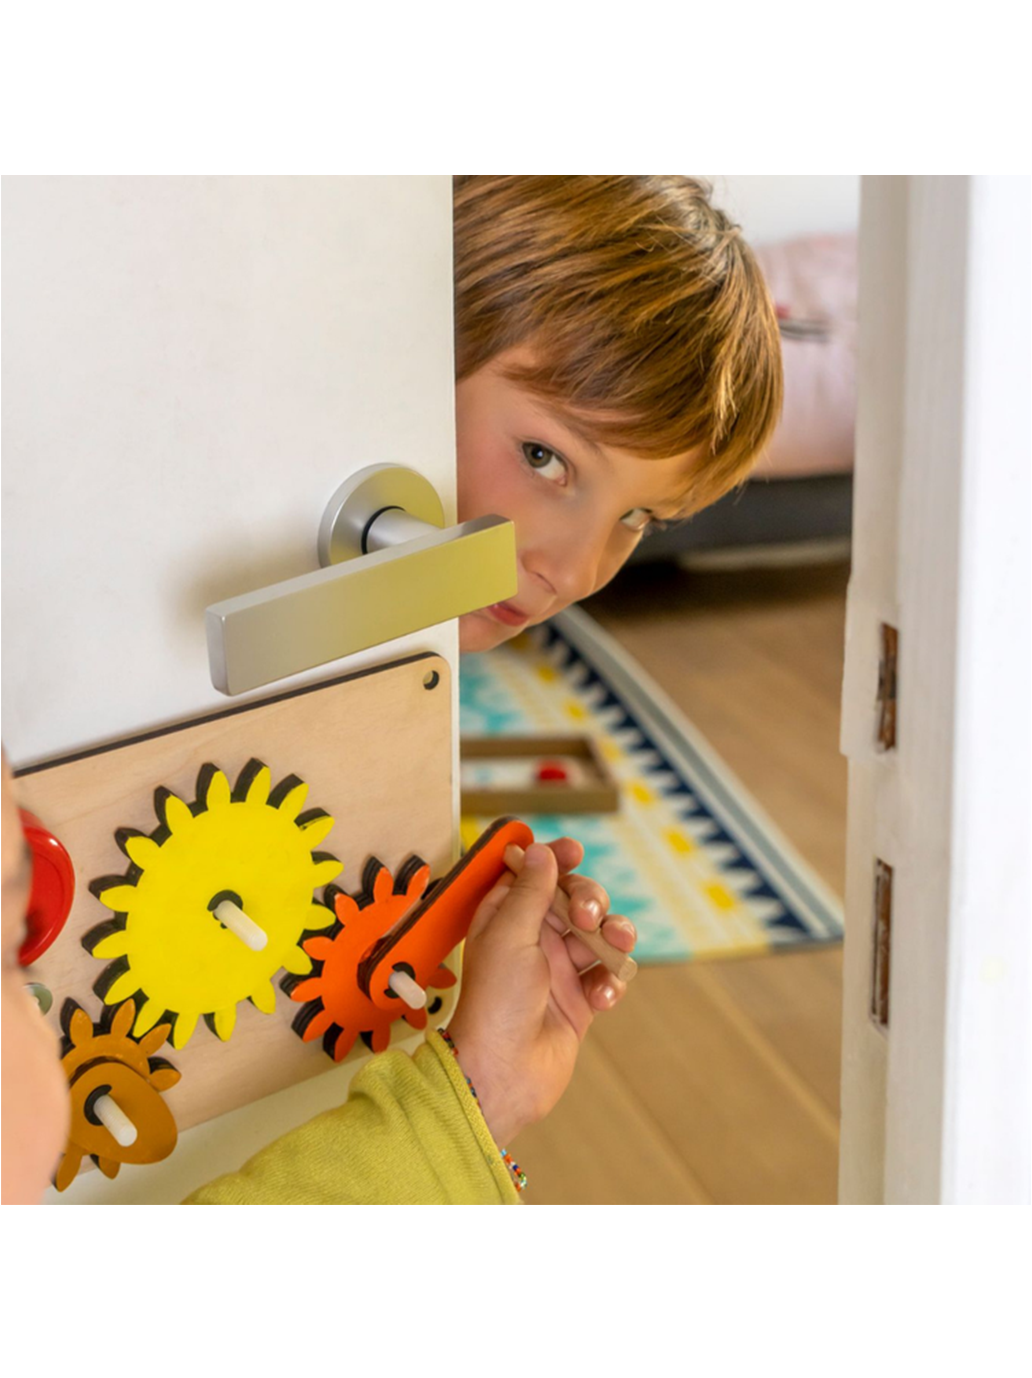 STEM toy create a doorbell